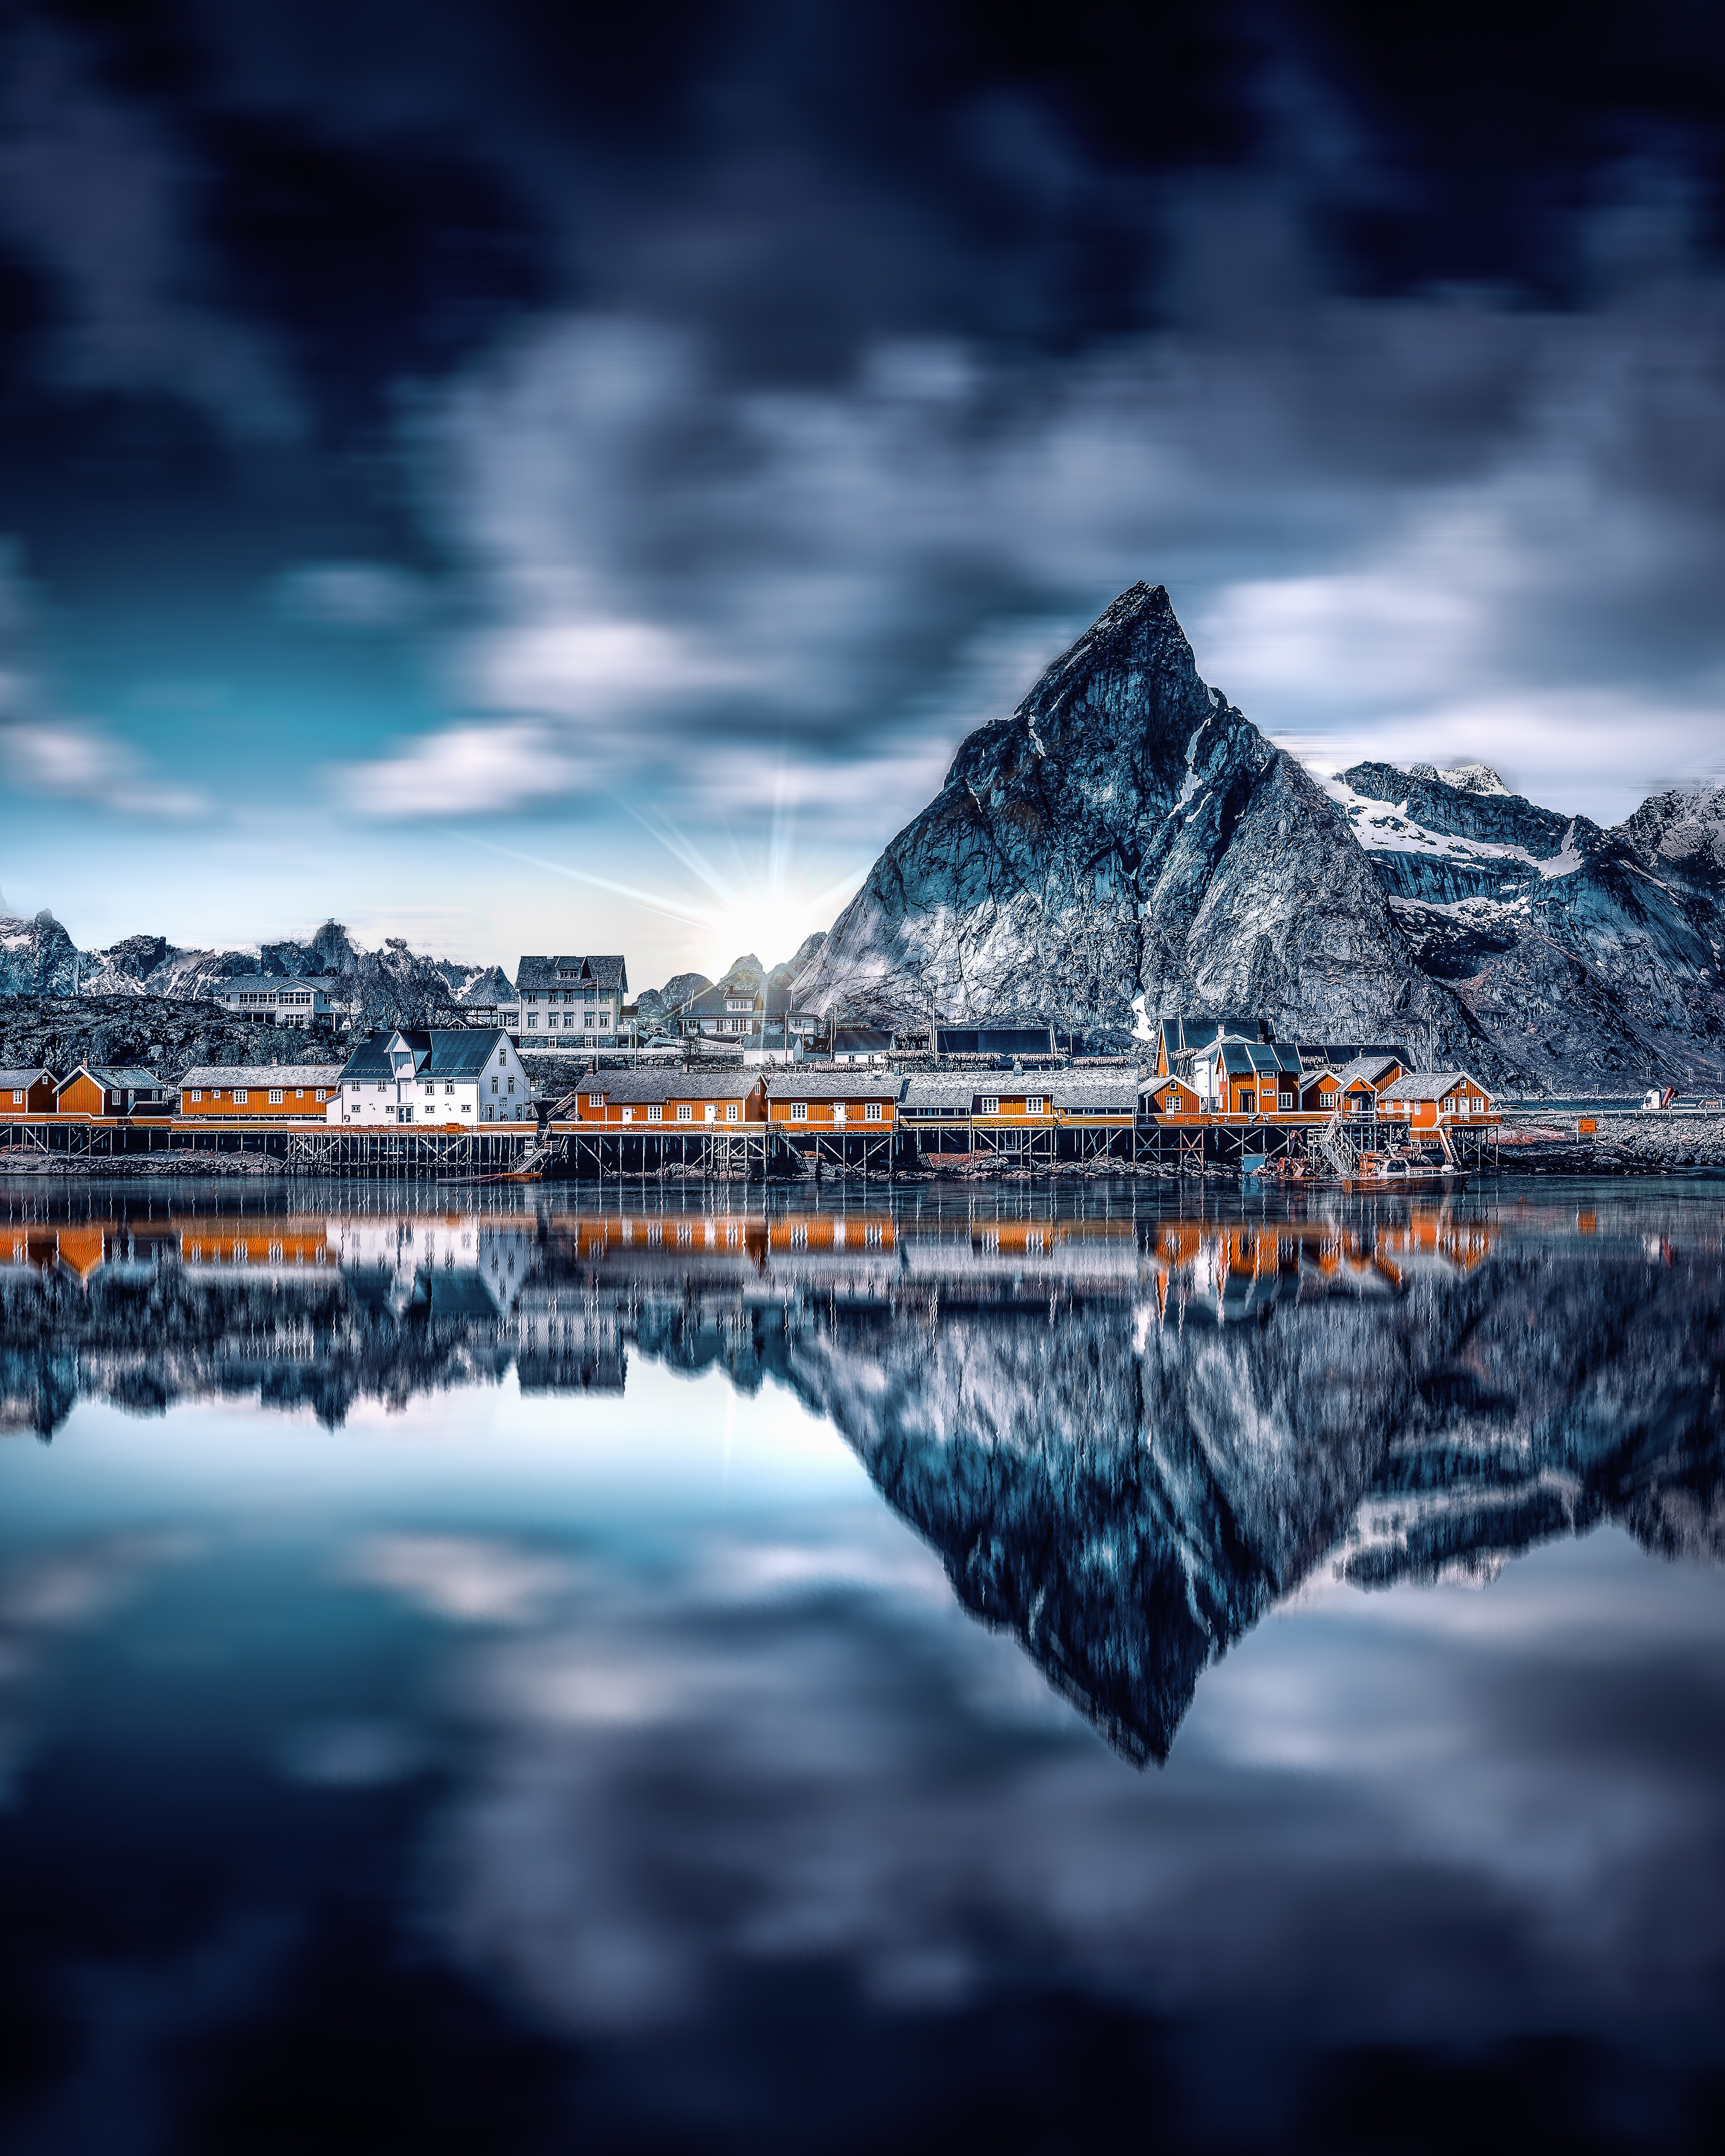 Reflection buildings, lake, mountains, nature 4k Wallpaper